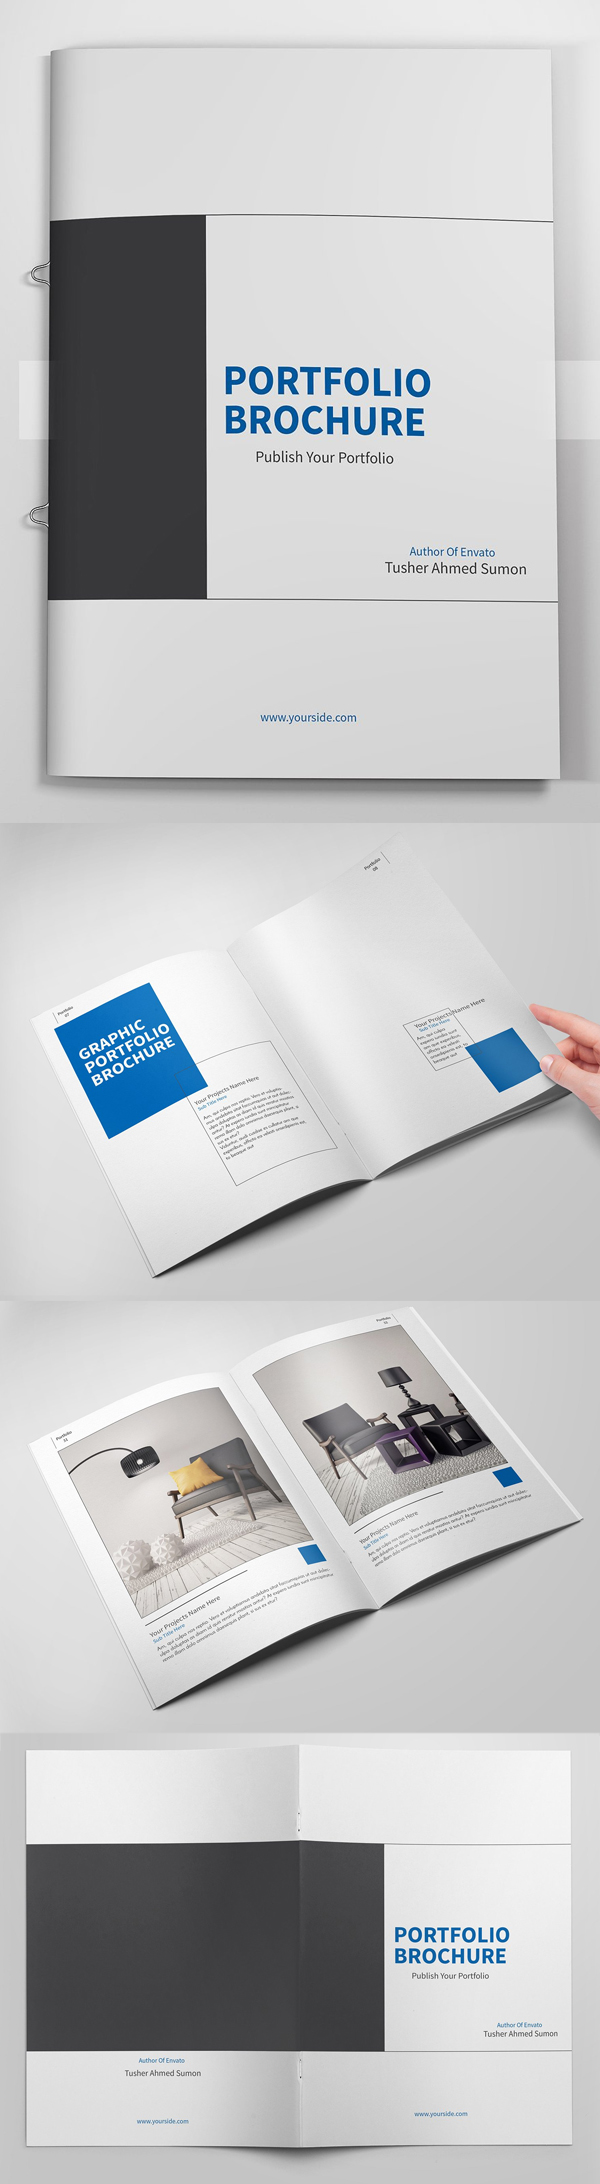 100 Professional Corporate Brochure Templates - 68